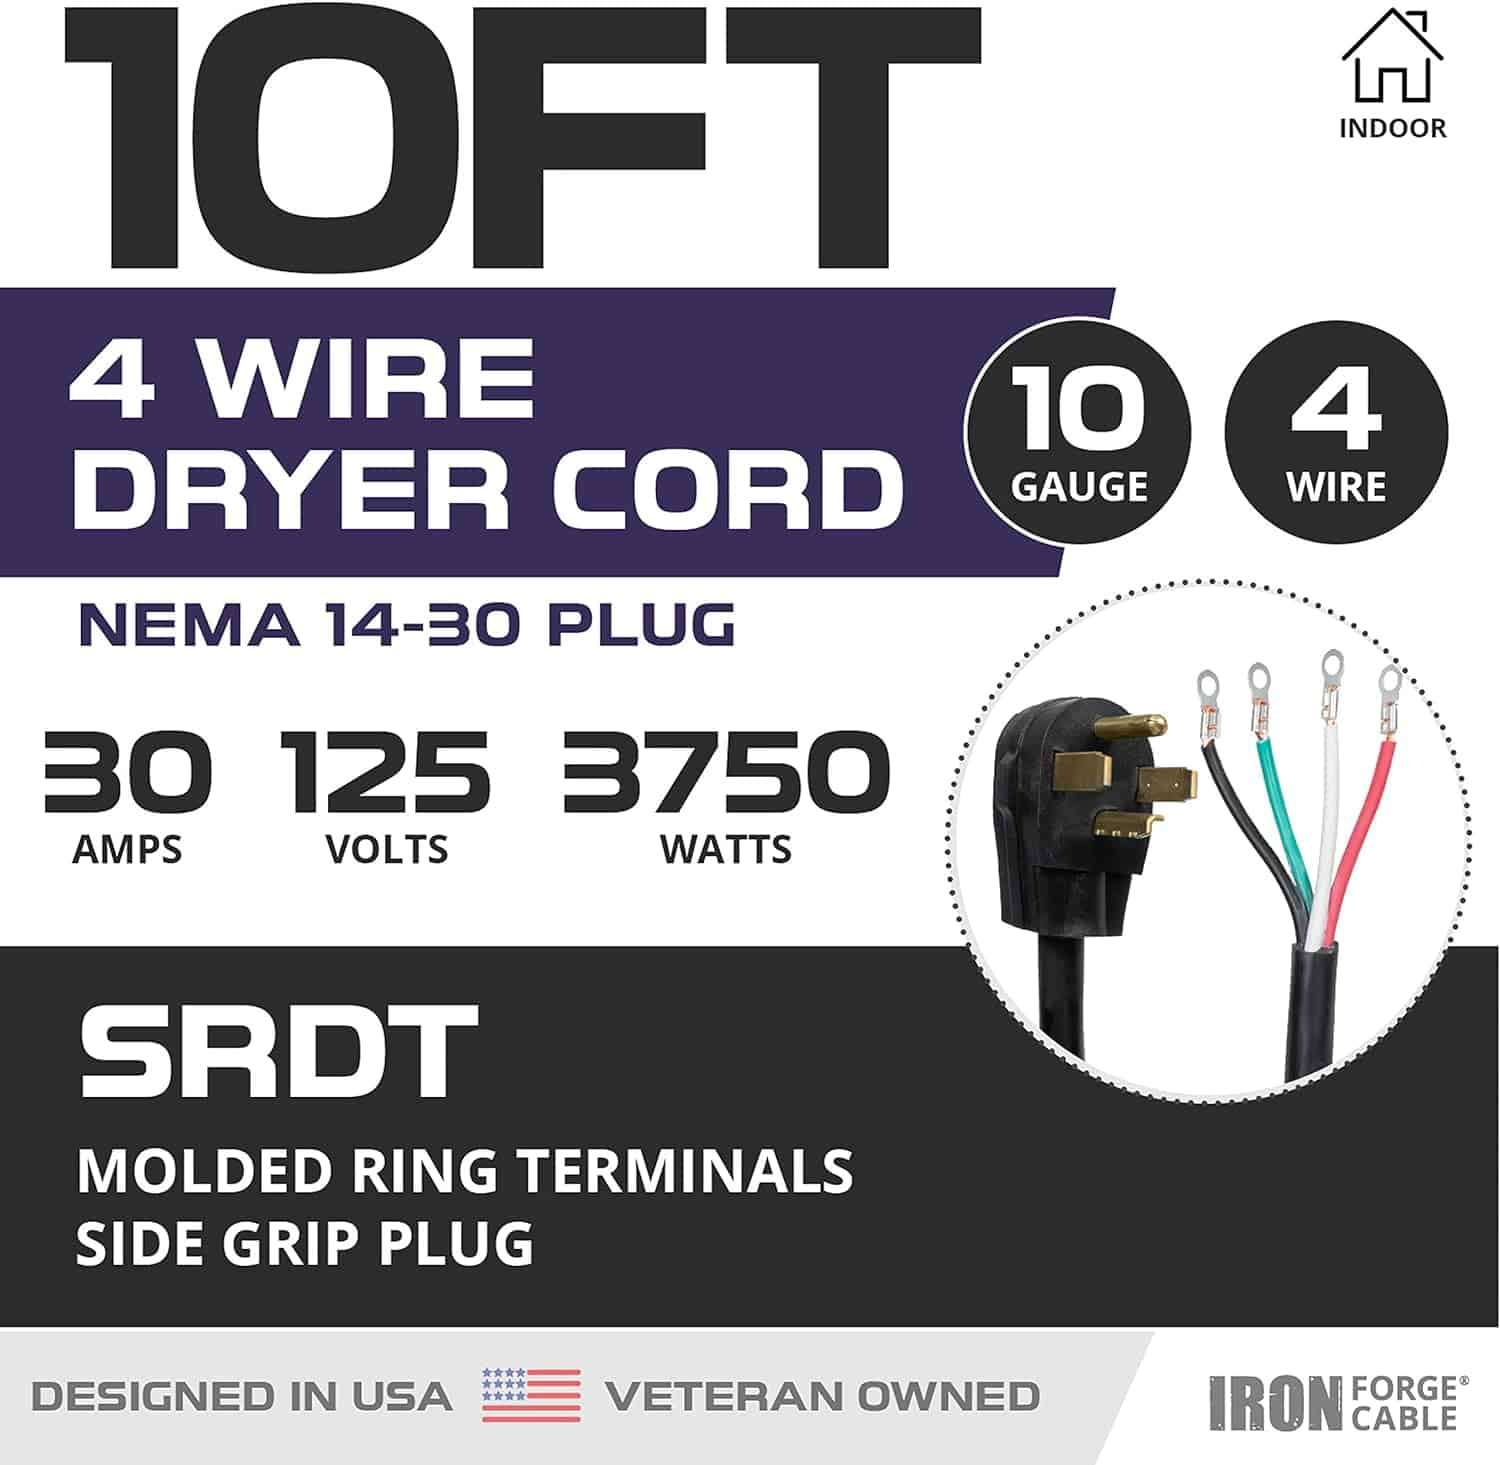 IRON FORGE CABLE 4 Prong Dryer Cord – 10 Ft Dryer Extension Cord Power Plug, 10 4 SRDT, 30 Amp, NEMA 14-30, Black 2